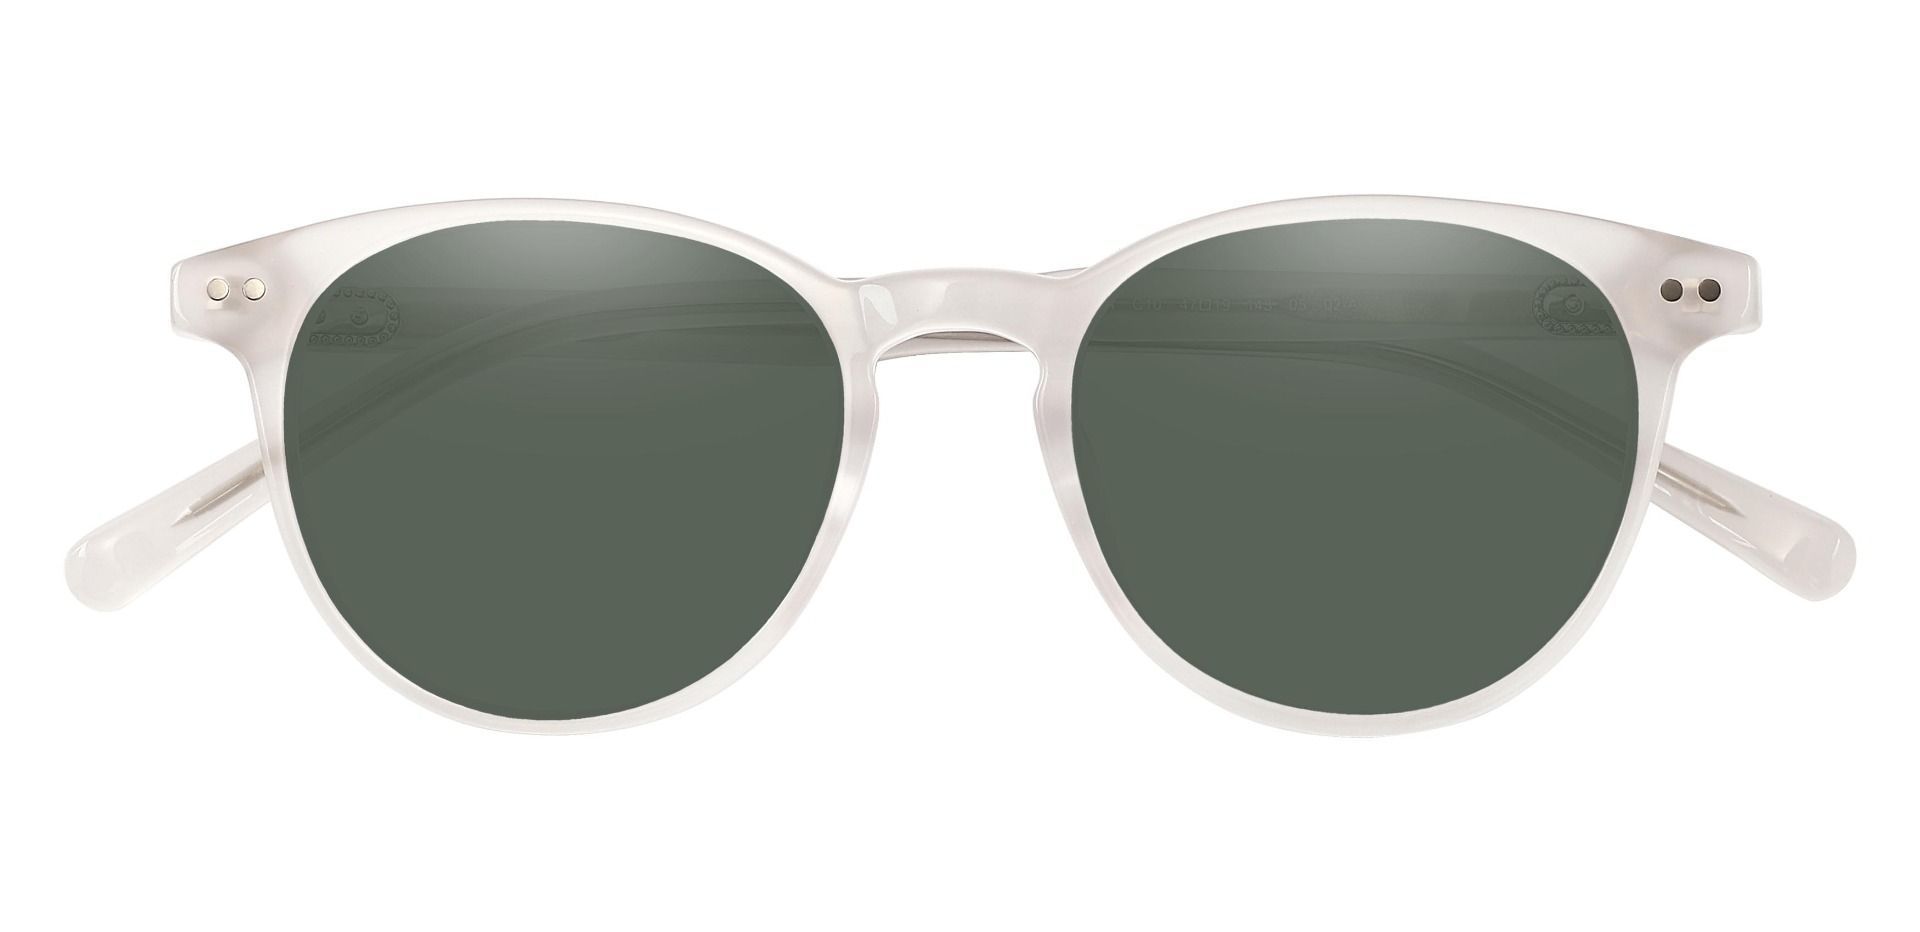 Marianna Oval Prescription Sunglasses - White Frame With Green Lenses